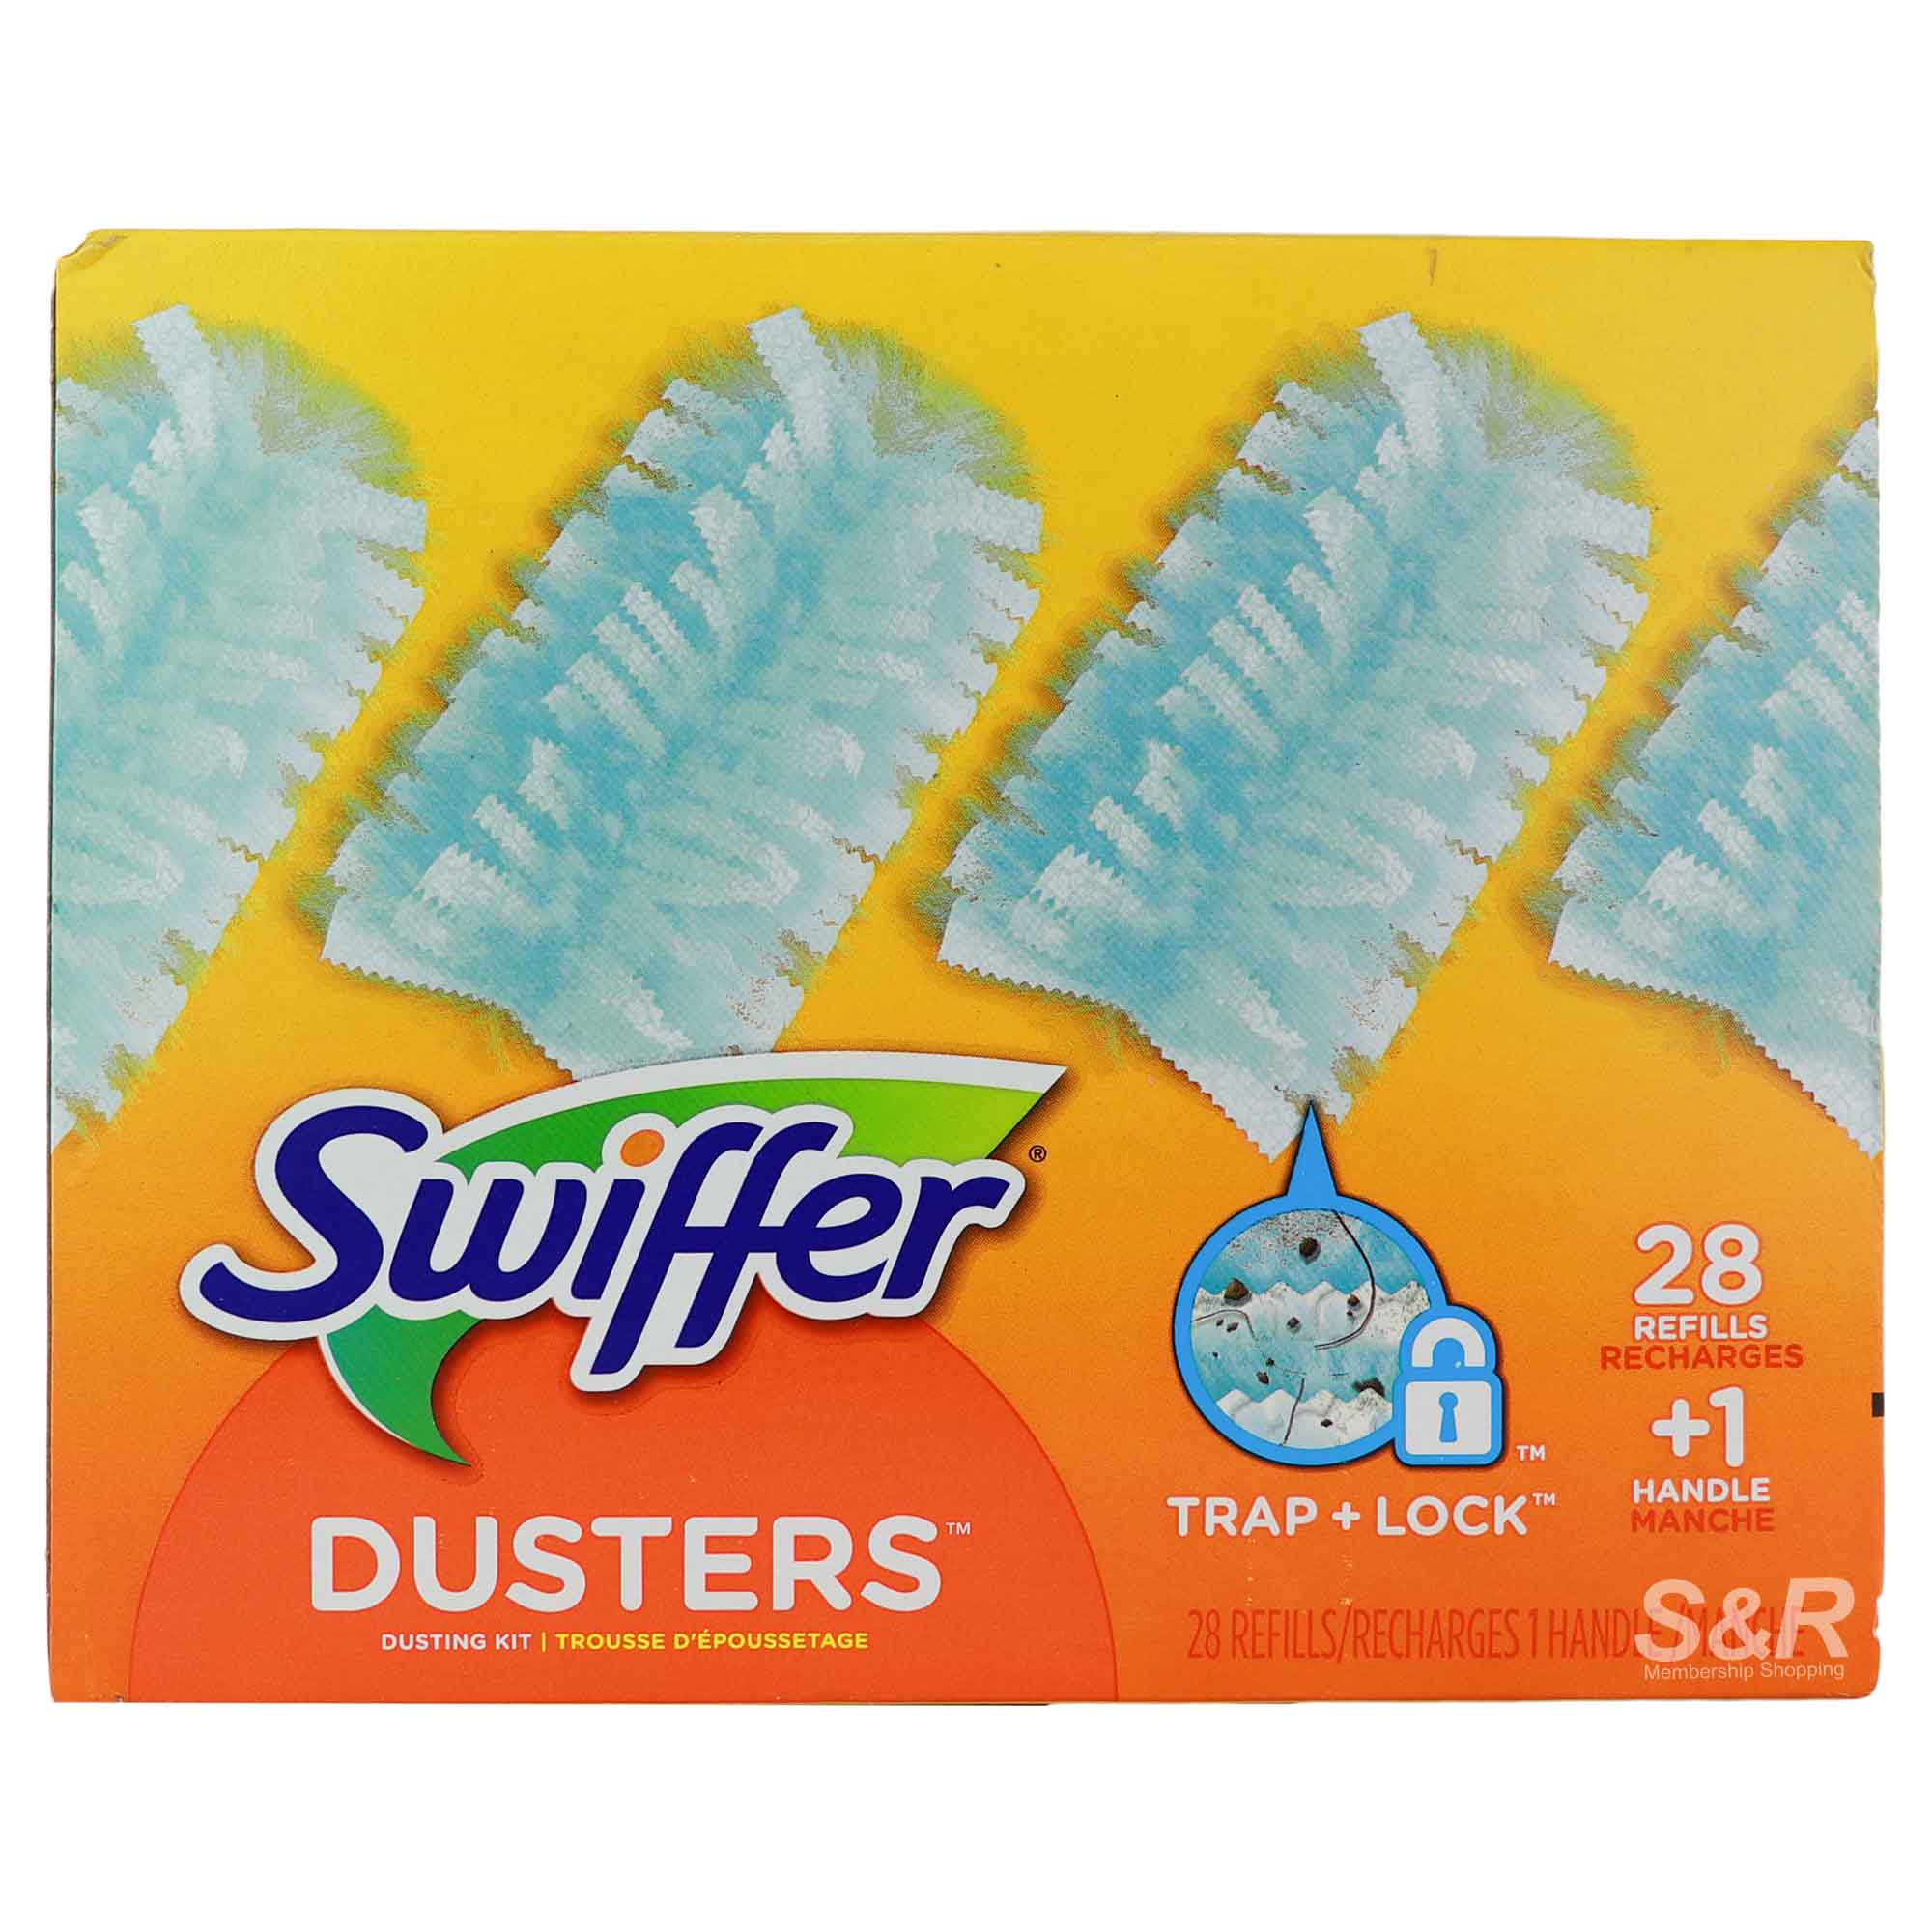 Swiffer Dusters Refills 1 set